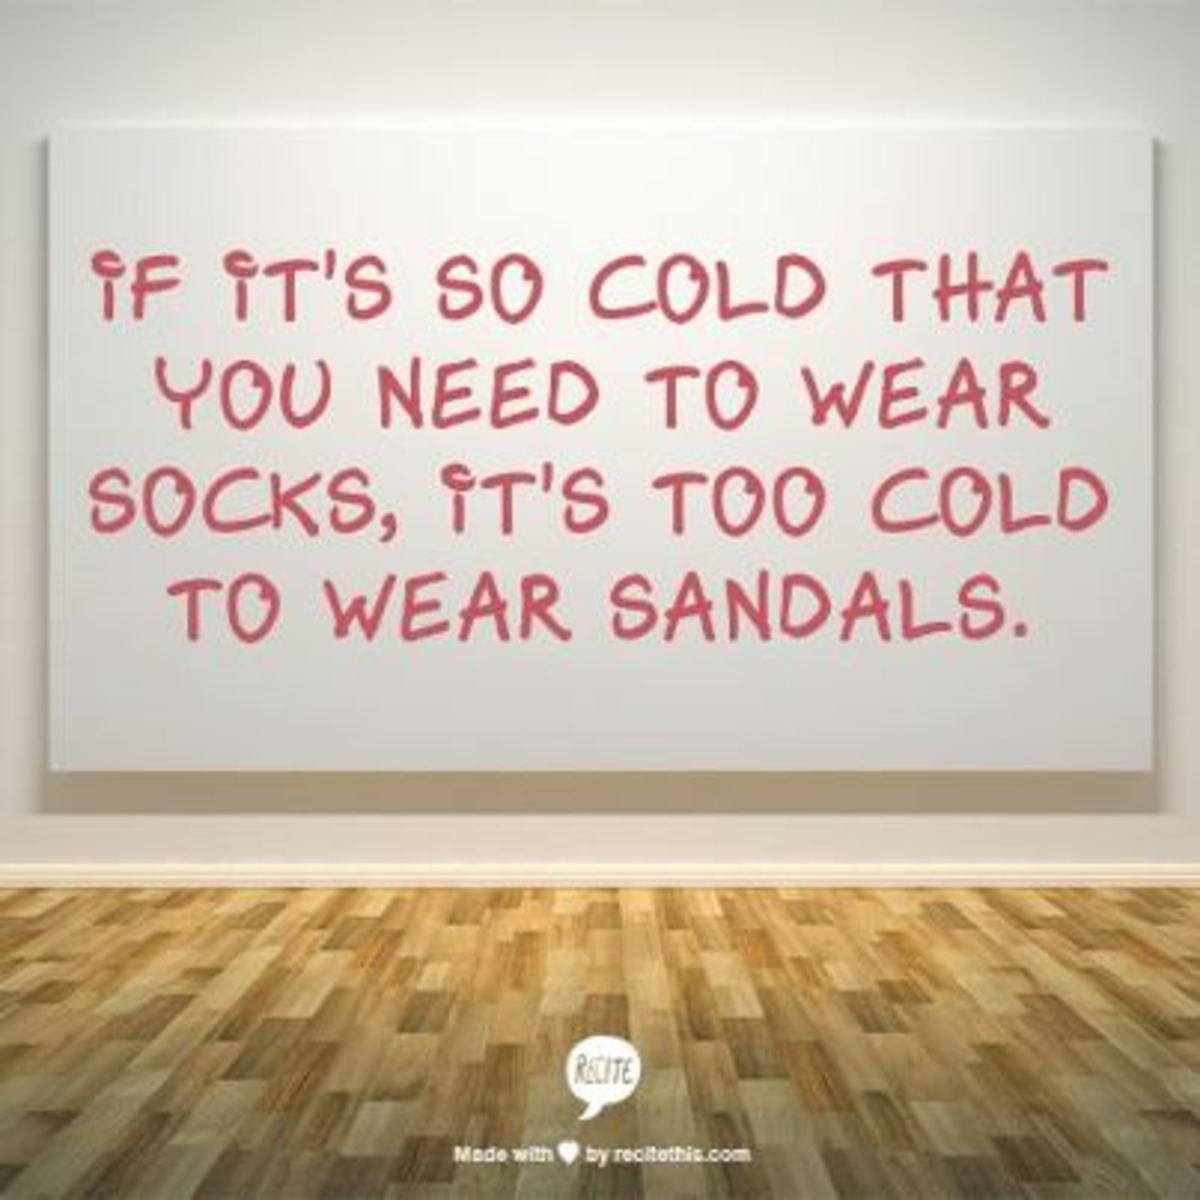 Socks and Sandals - No No